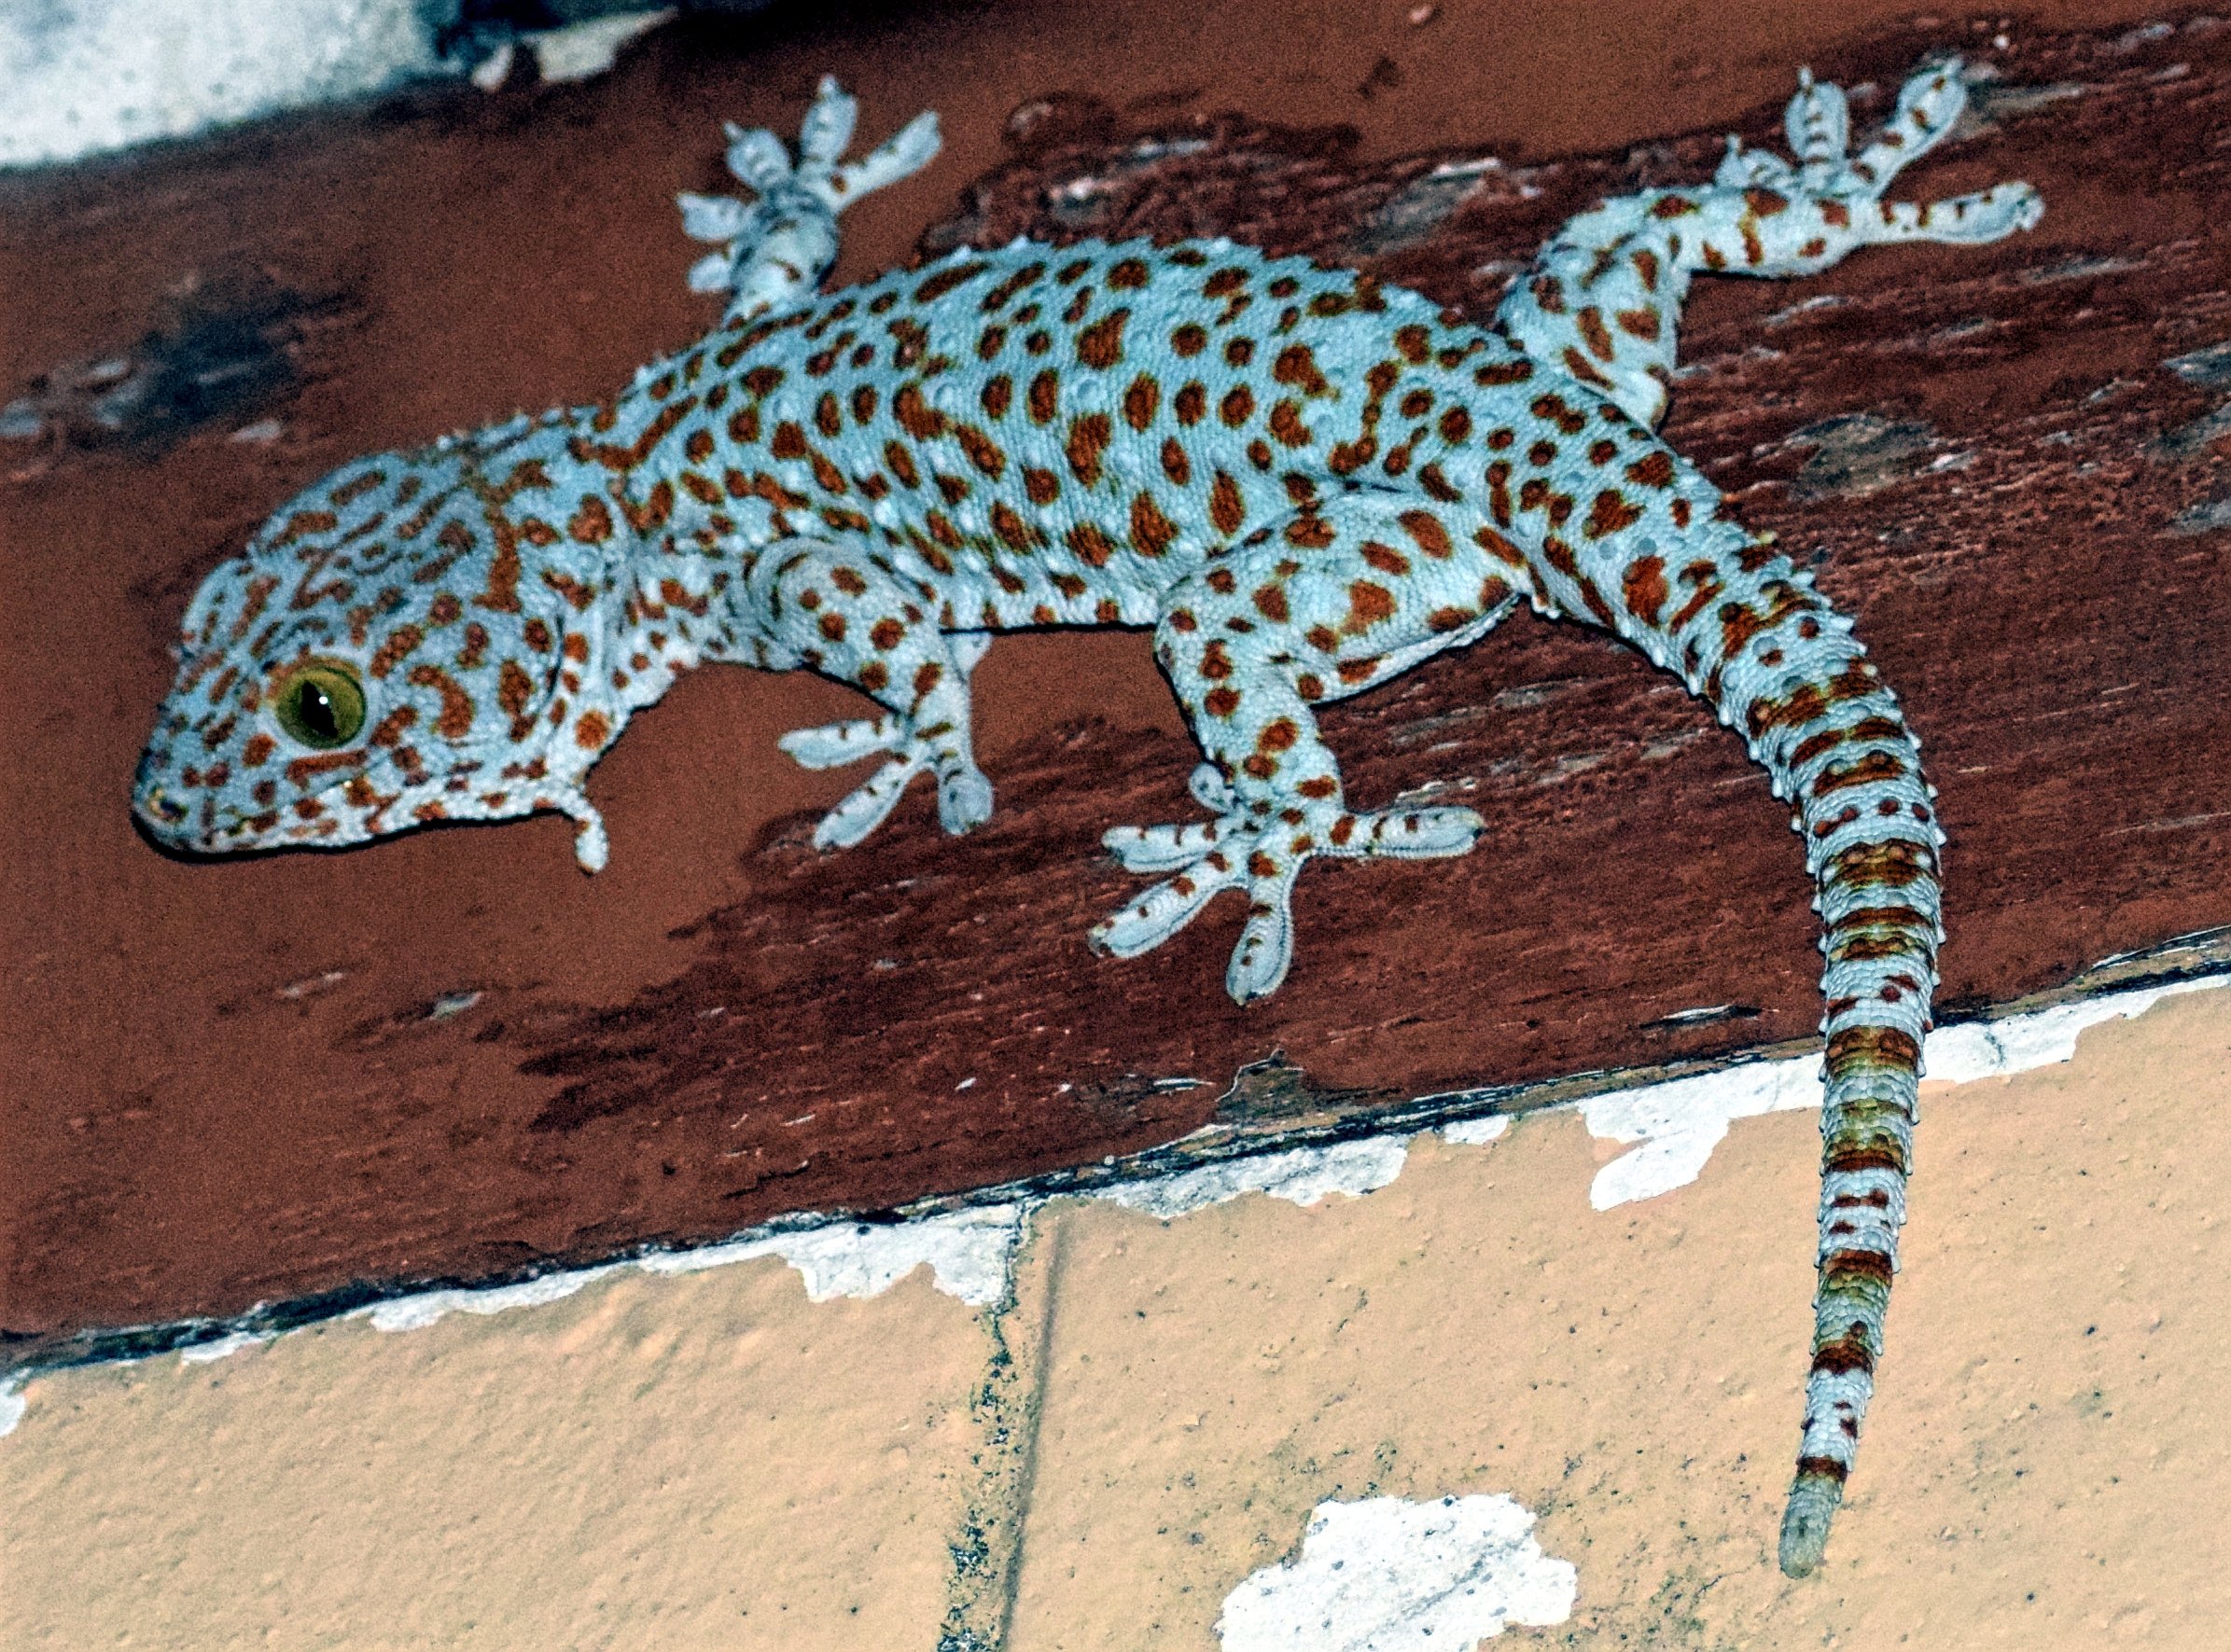 <p>Tokay gecko [image by: PumpkinSky/Wikipedia]</p>